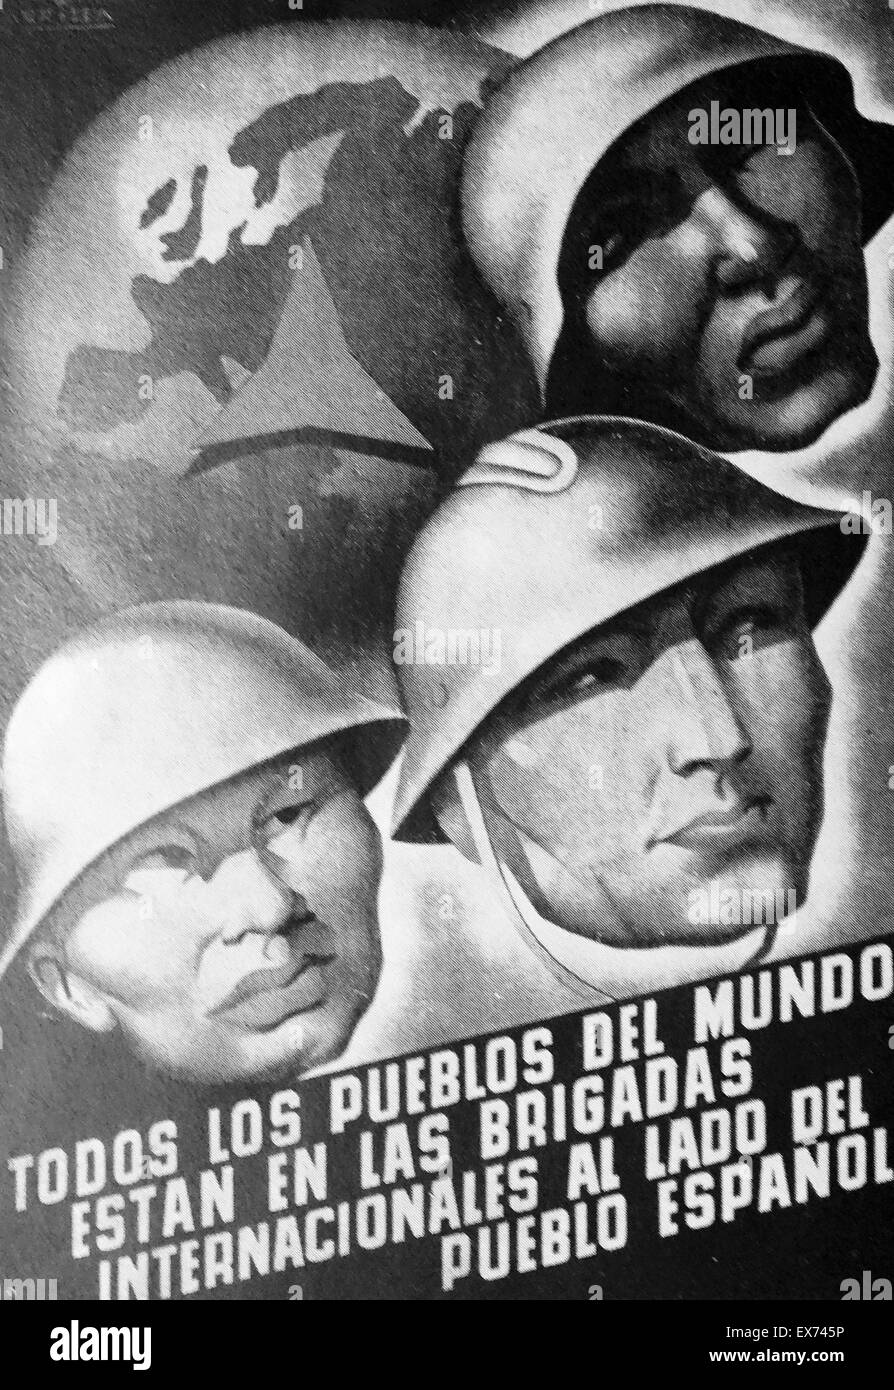 Poster entitled 'Todos los Pueblos del Mundo estan en las Brigadas International Brigades poster during the Spanish Civil War 'All the People of the World are United With Spain'), Spain, 1937. Stock Photo